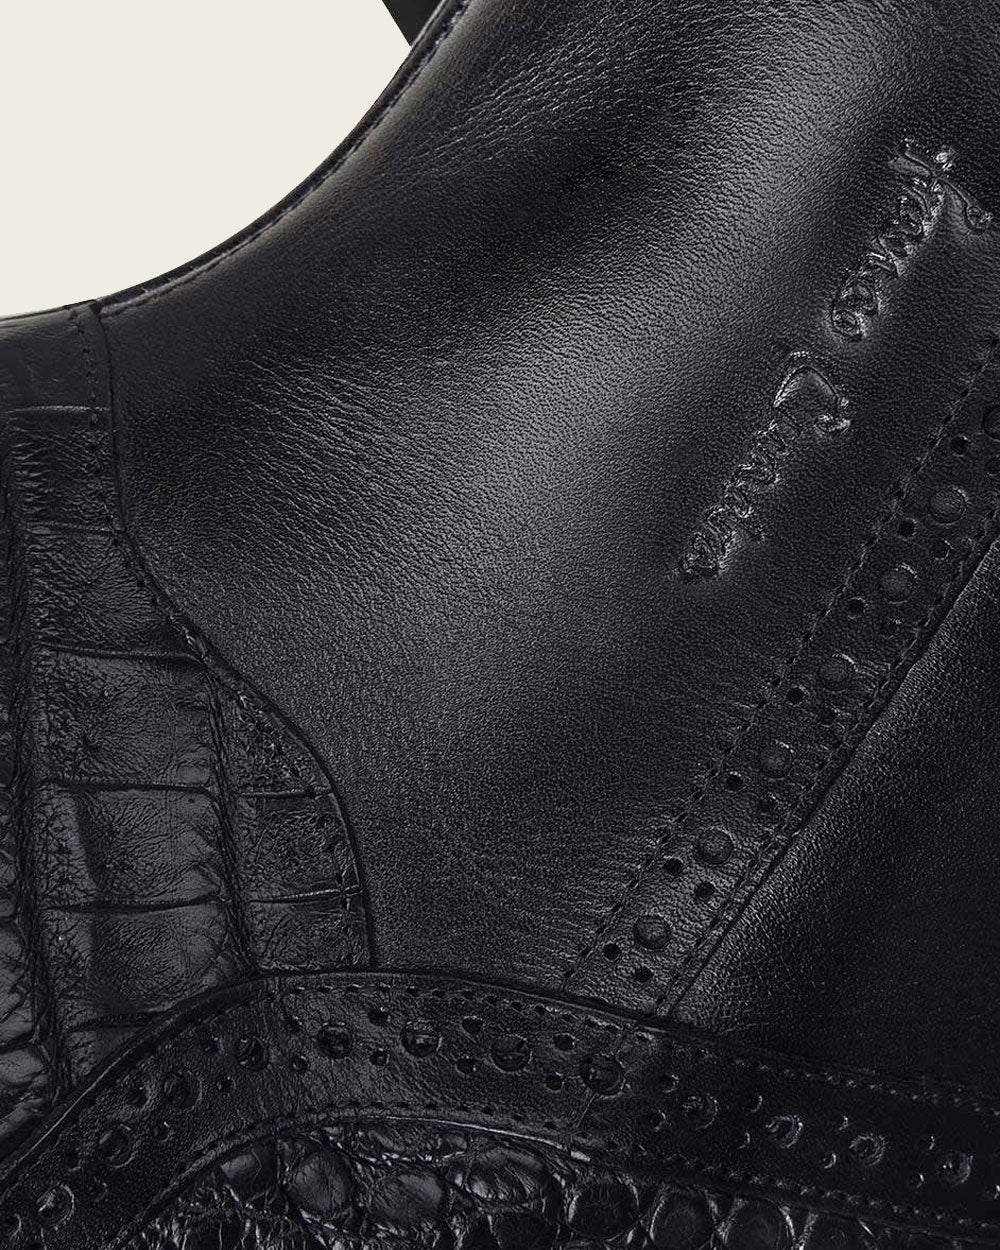 Subtle brocade & Cuadra logo: Distinctive design elevates your black boots.